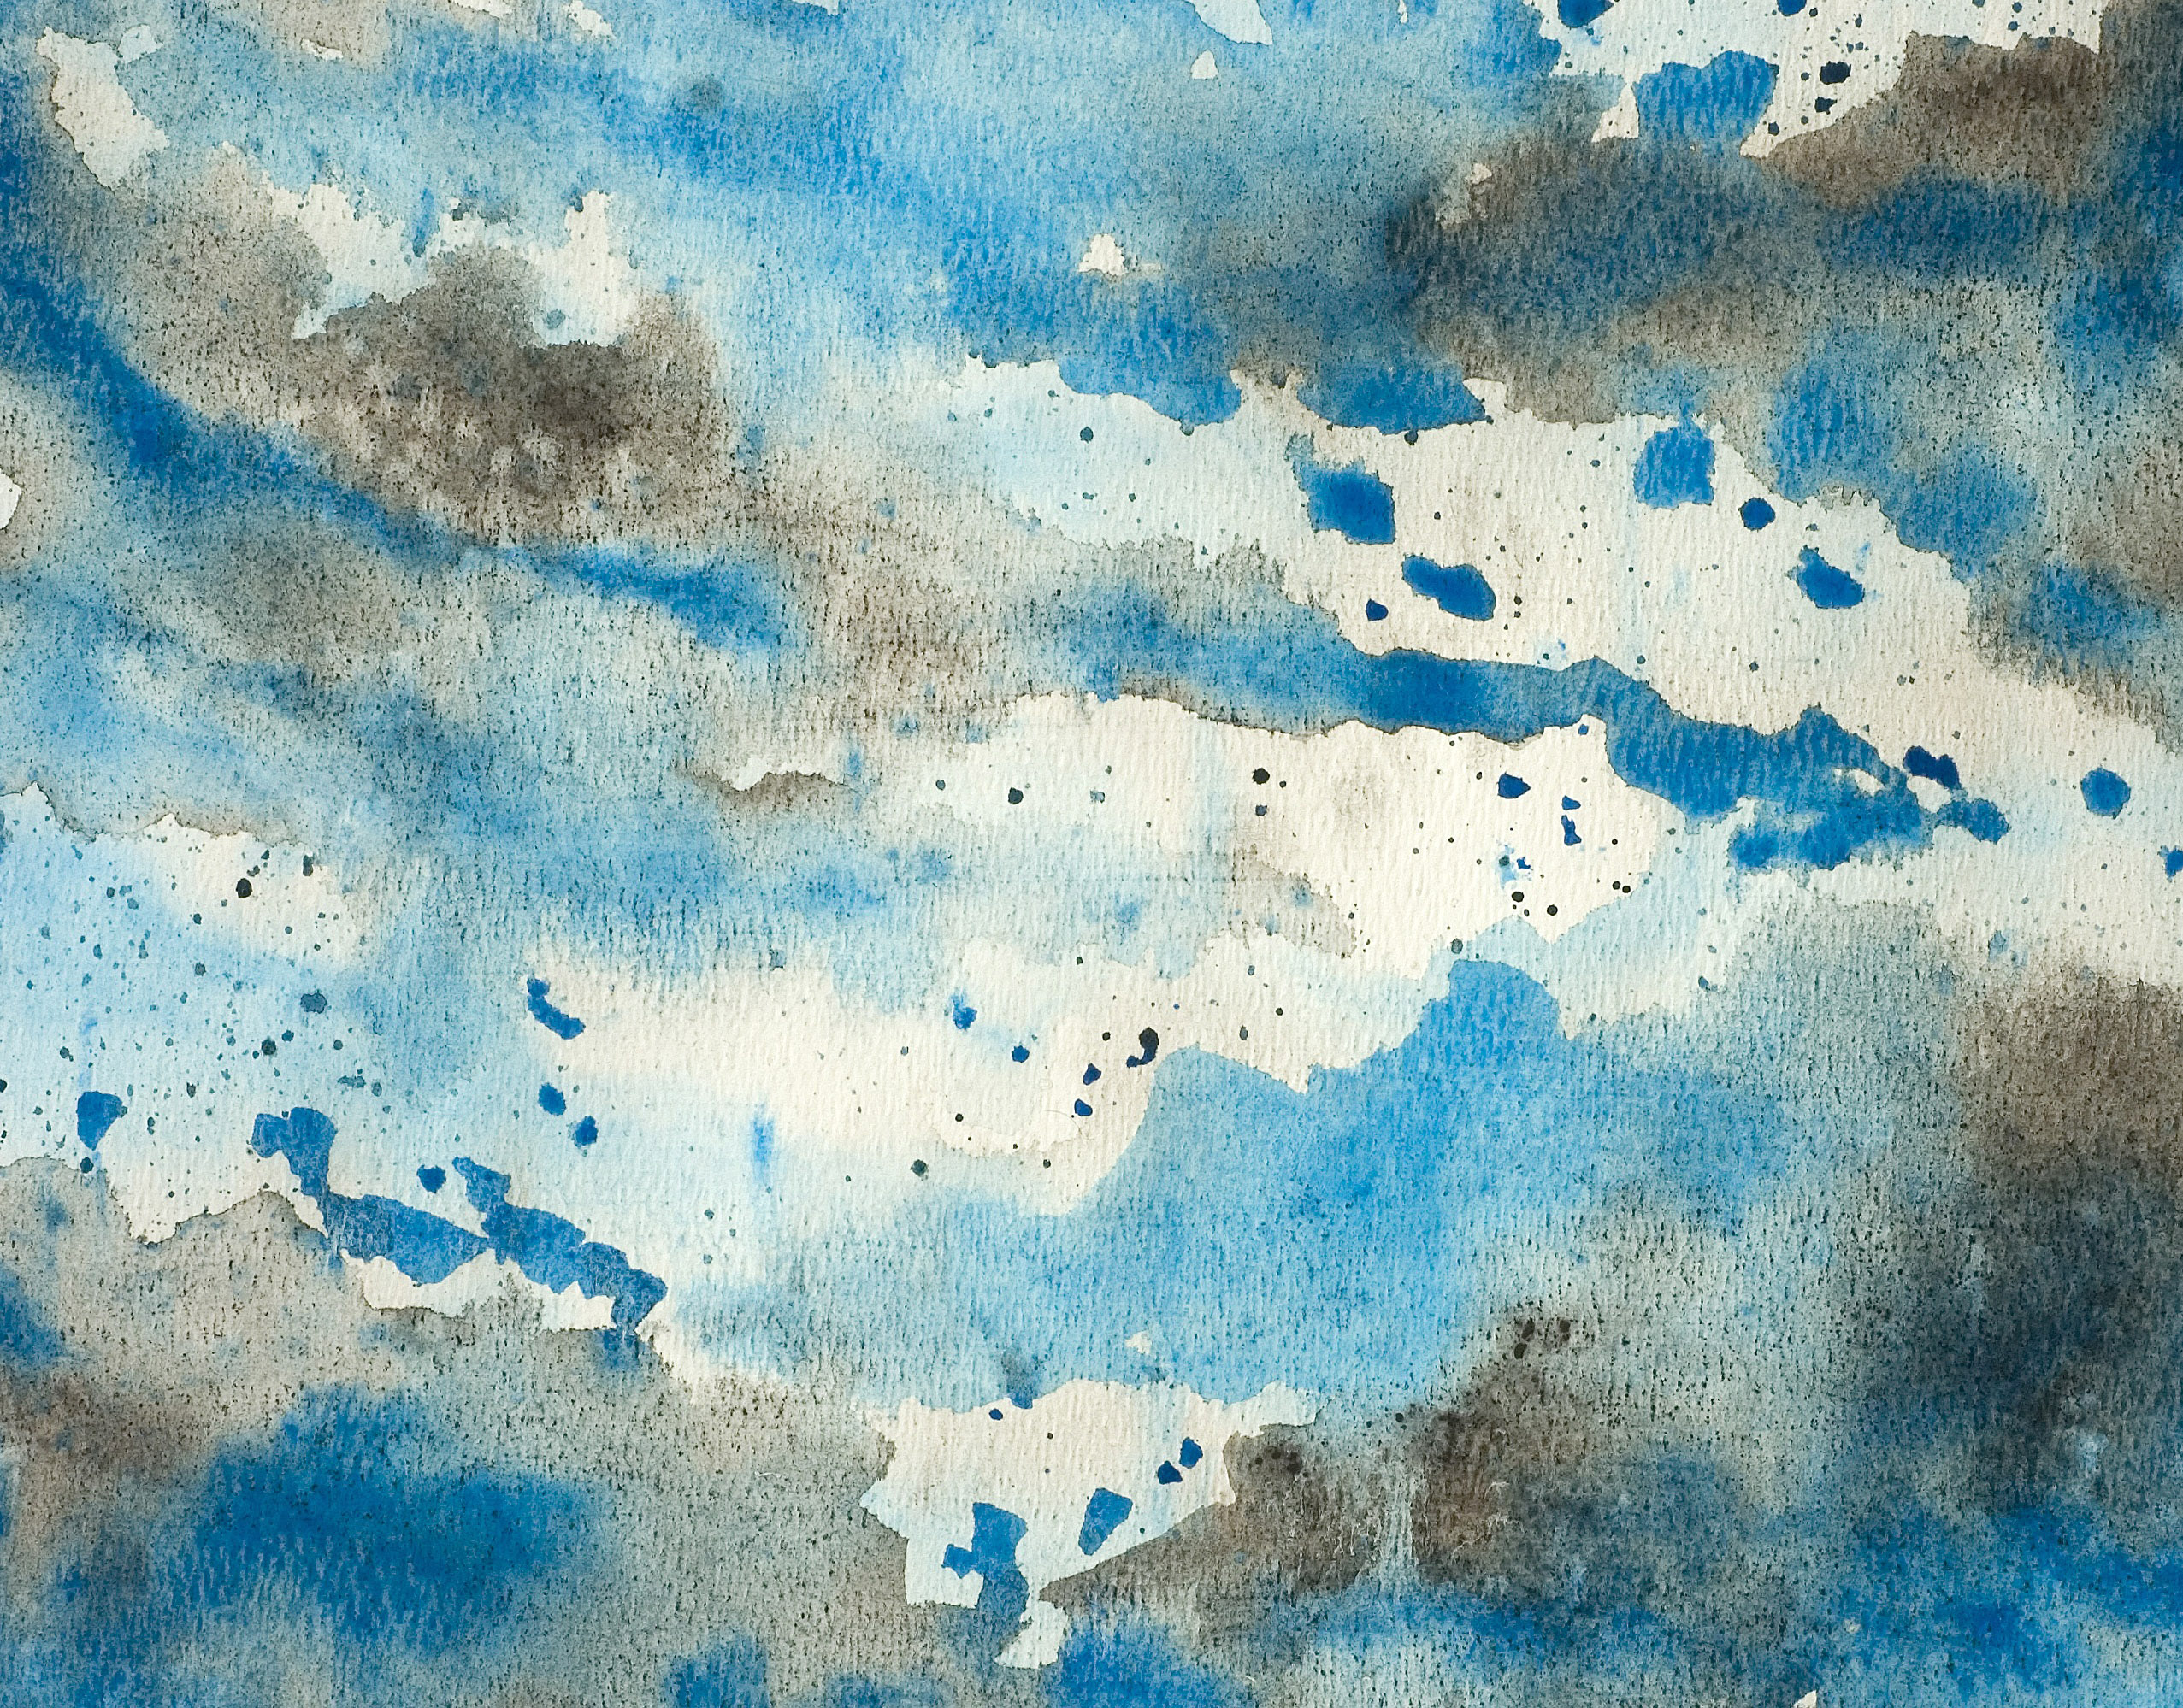 Blue Watercolor Background image - Free stock photo - Public Domain